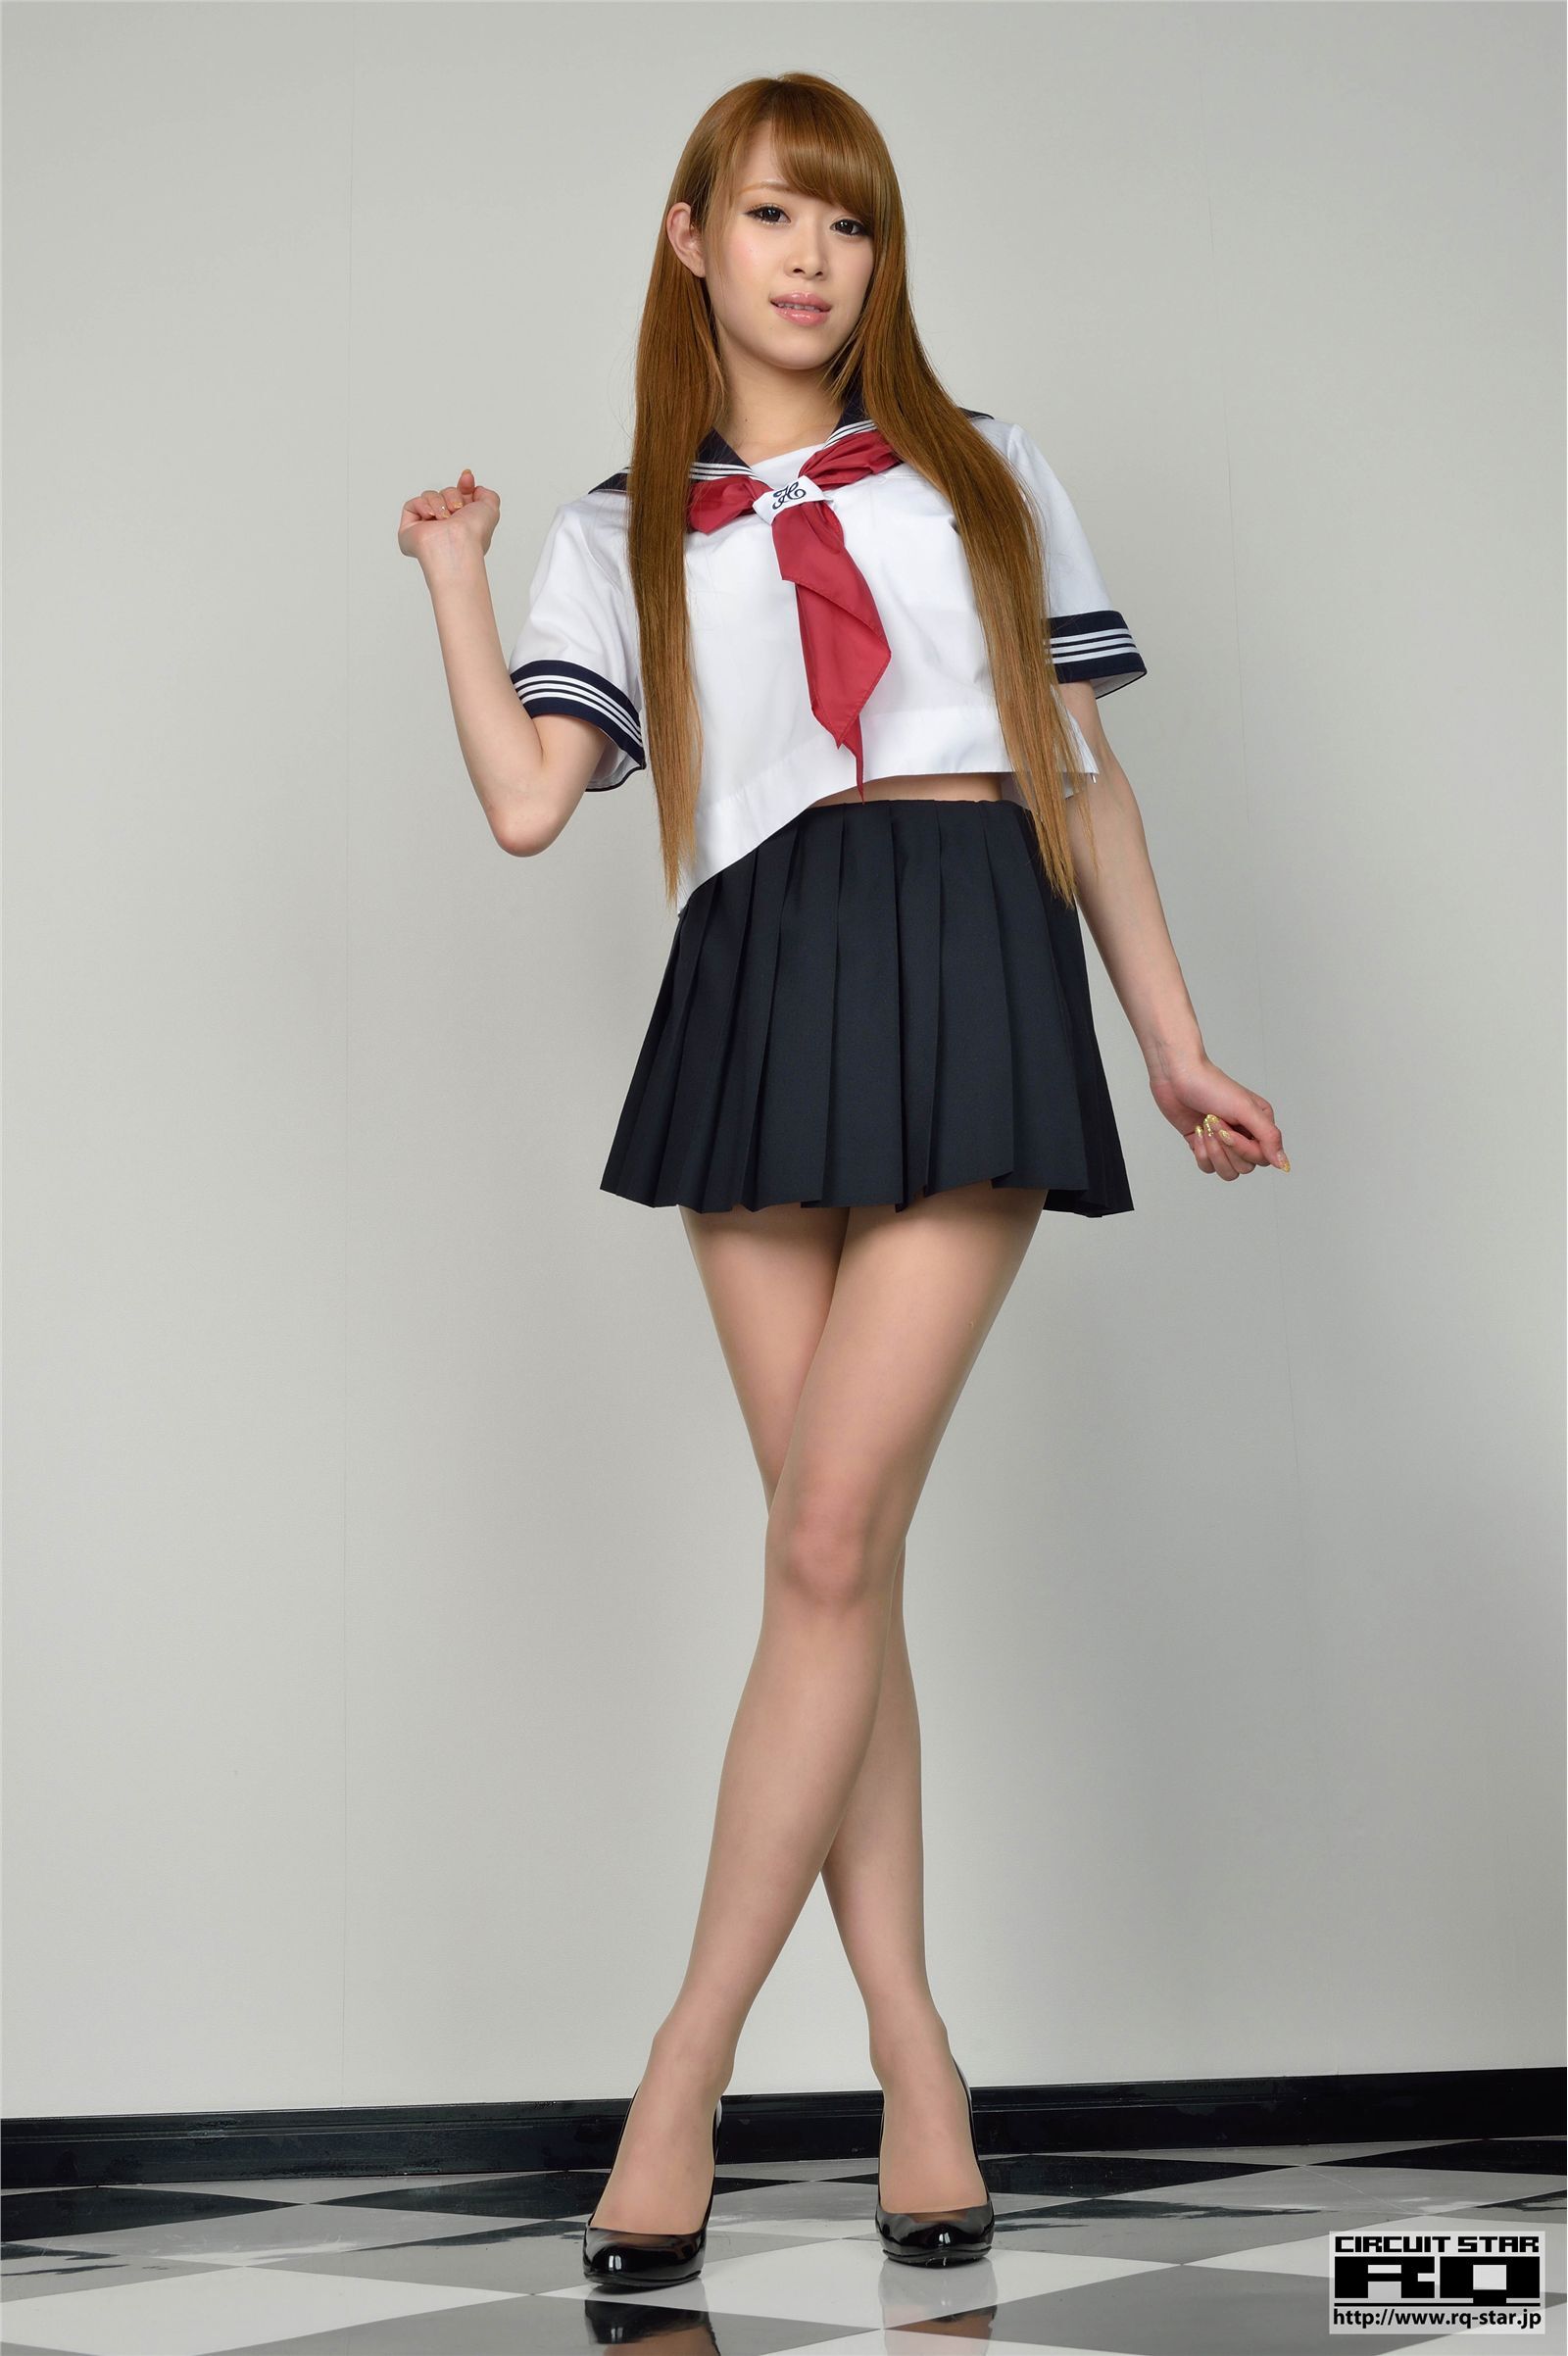 Japanese beauty uniform